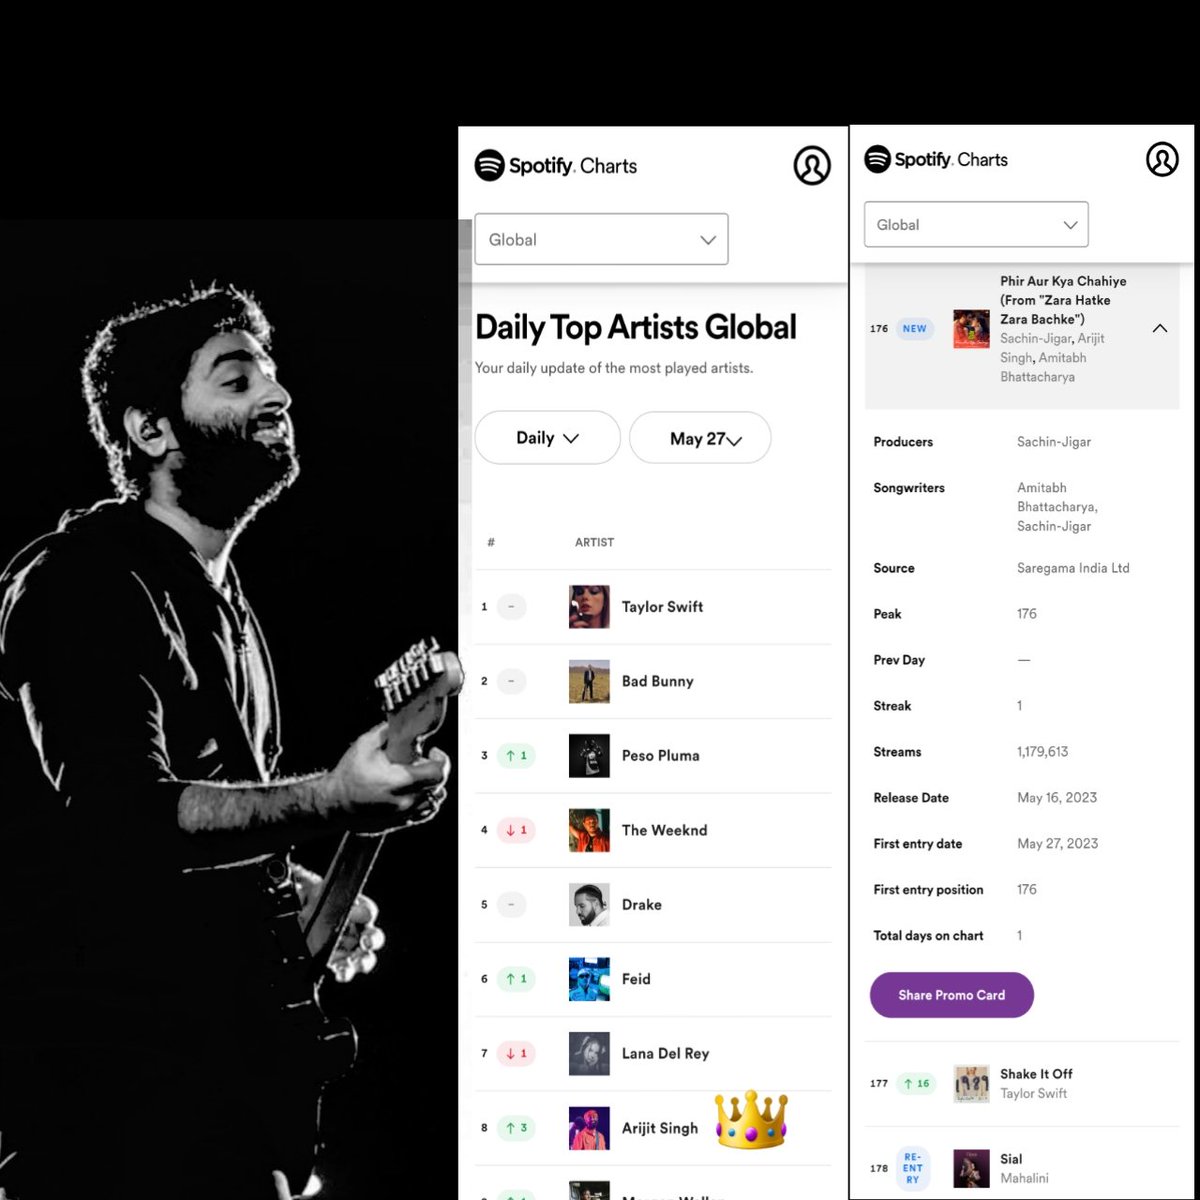 Arijit Singh rises 3 spot and re-enters  at #8 on 'Spotify Global Daily Top 10 Artists' chart [27 May] 👑💥
'Phir Aur Kya Chahiye' has debuted in the global Spotify chart at #176 with over 1 million streams 🔥🥳

#ArijitSingh #SpotifyIndia 
#ZaraHatkeZaraBachke #PhirAurKyaChahiye